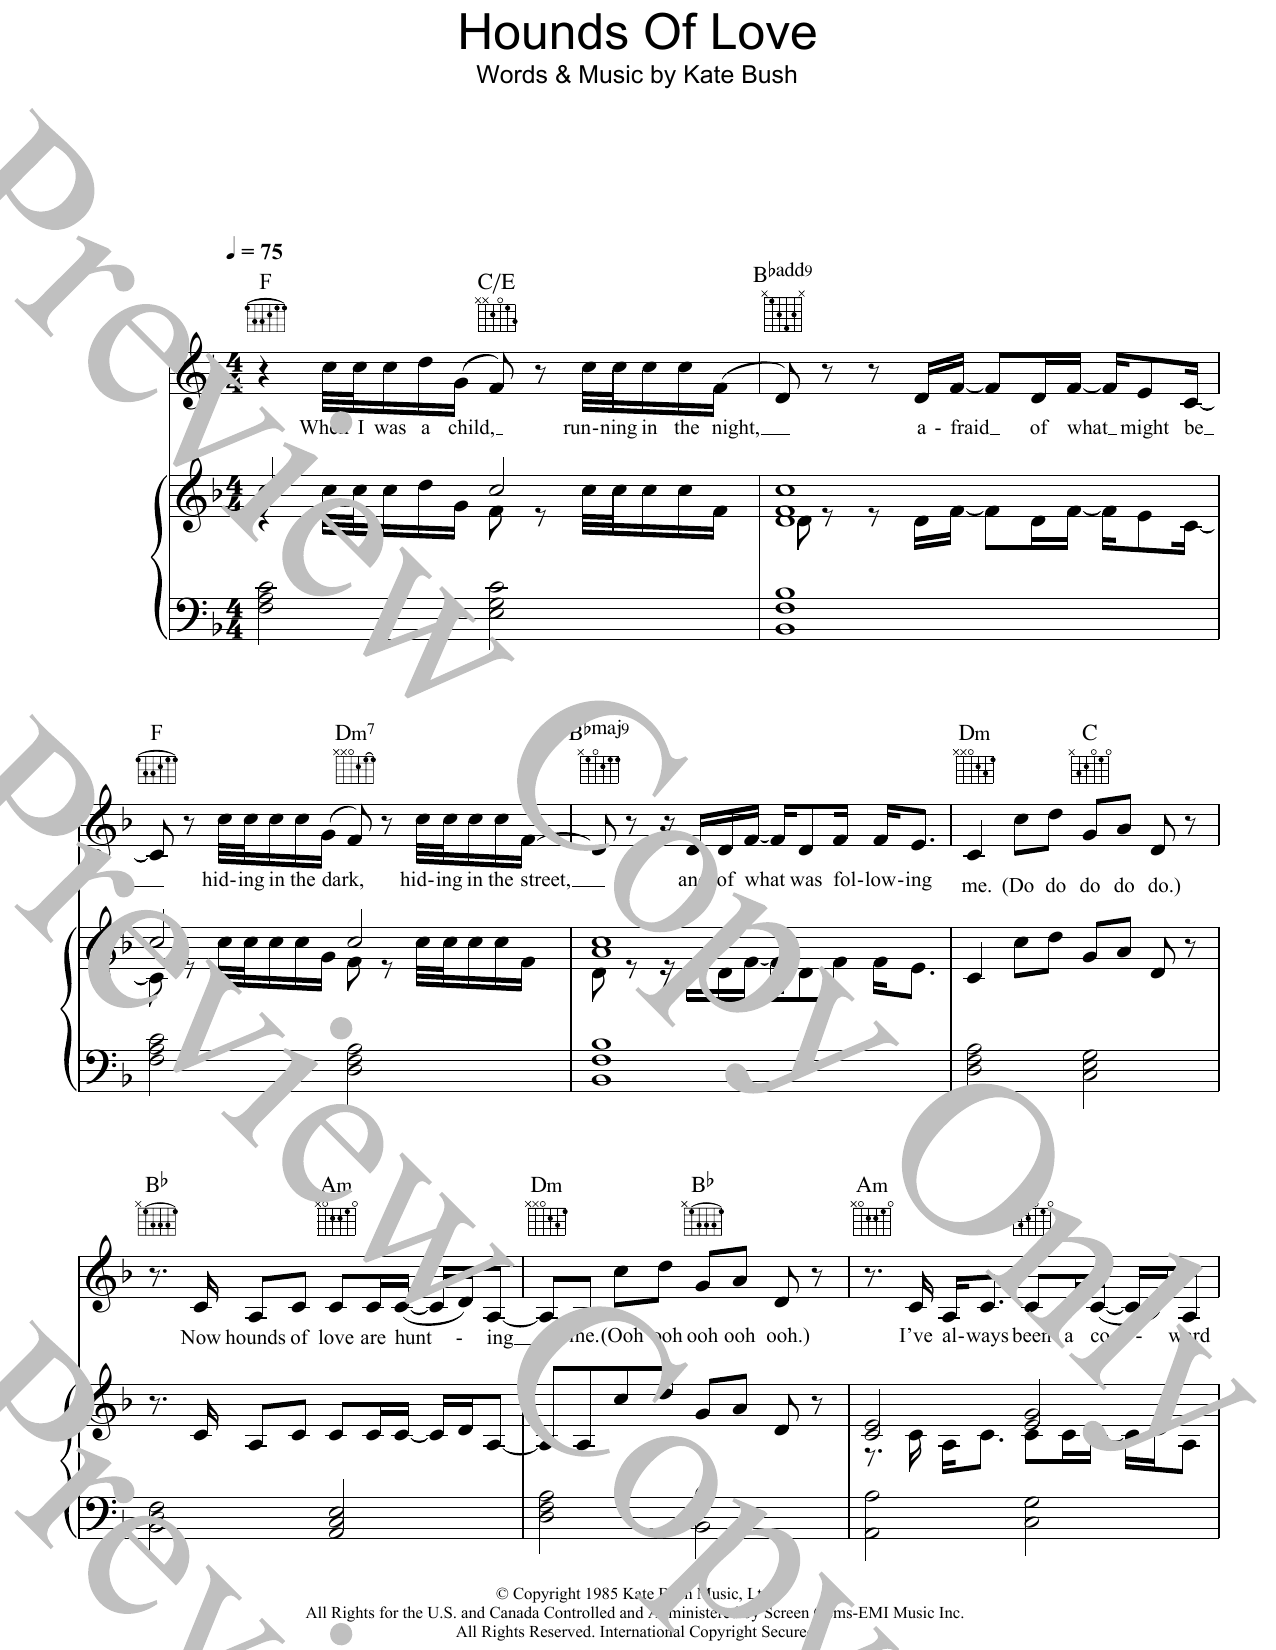 Kate Bush Hounds Of Love Sheet Music Notes & Chords for Lyrics & Chords - Download or Print PDF